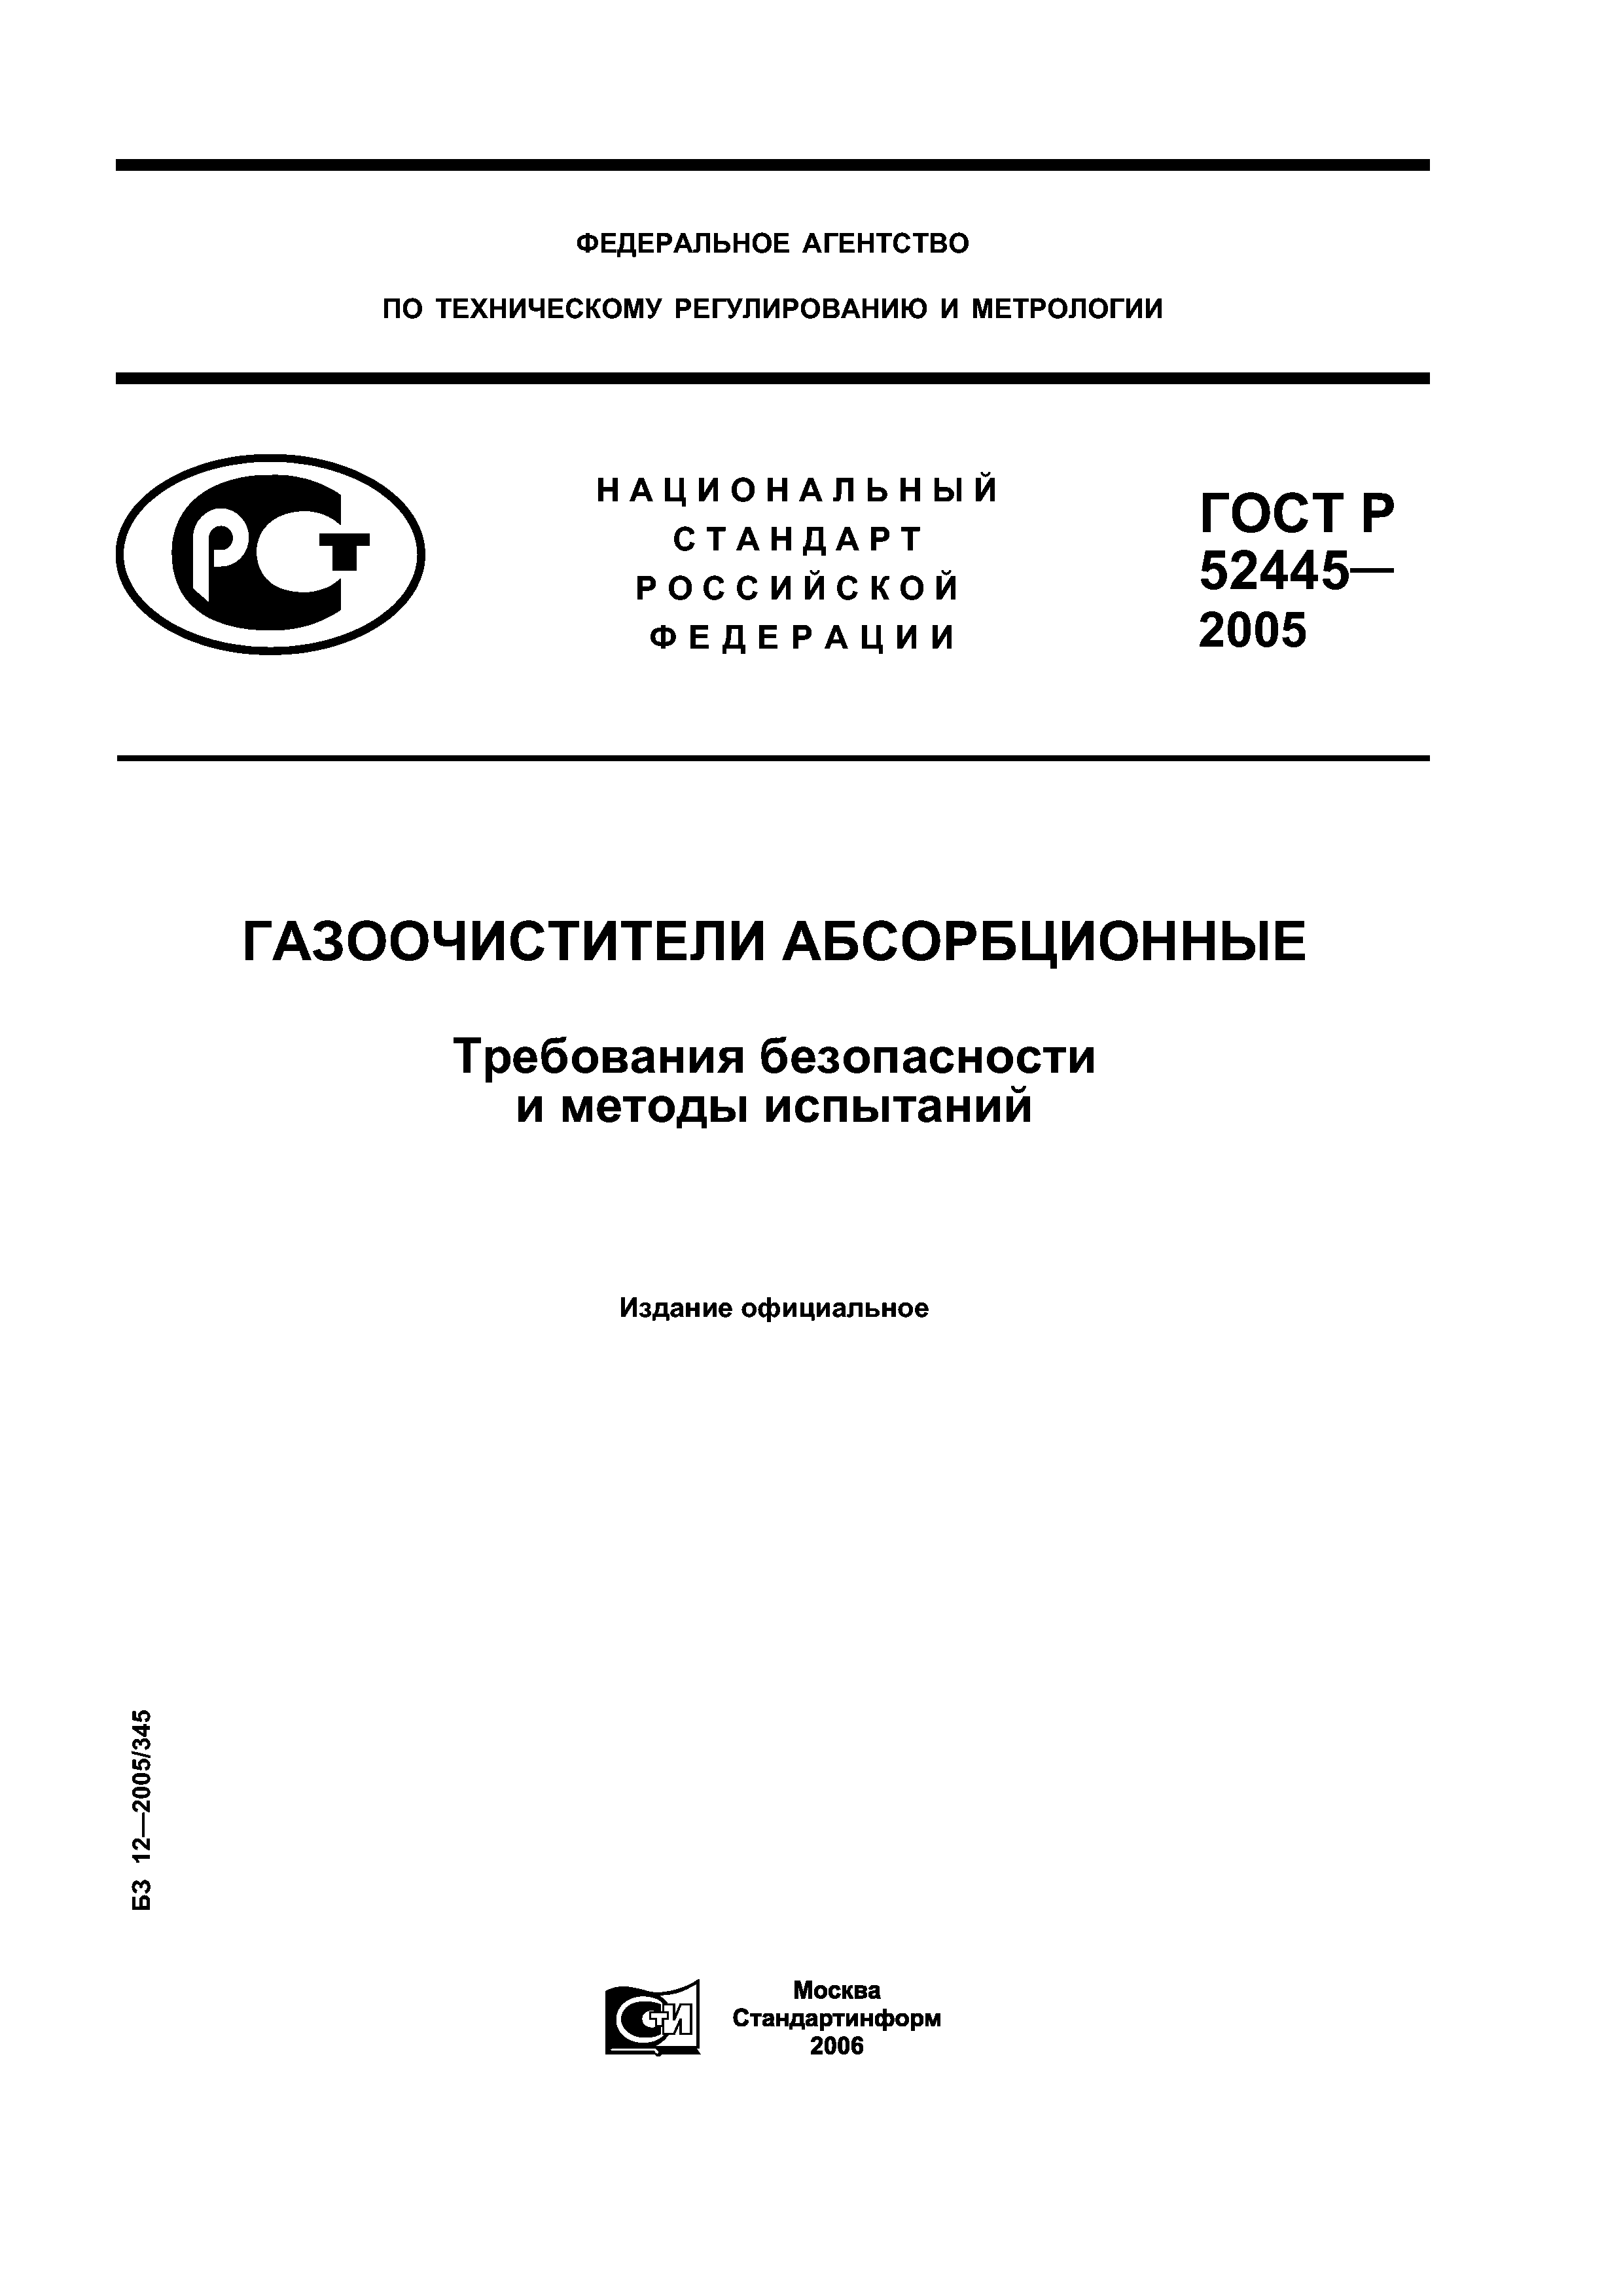 ГОСТ Р 52445-2005